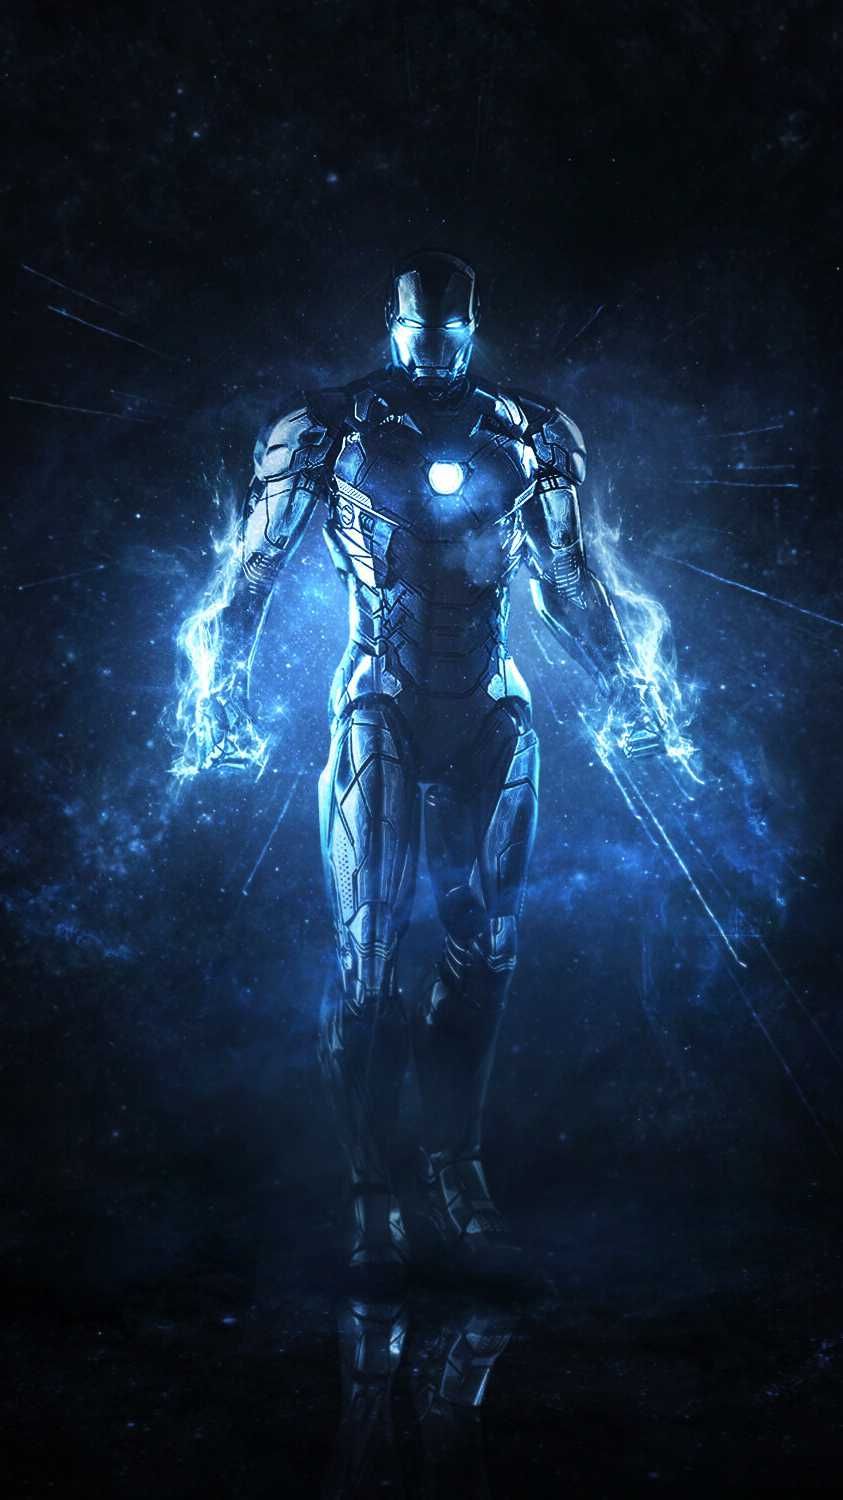 Dark Space Iron Man IPhone Wallpaper. Iron man avengers, Iron man